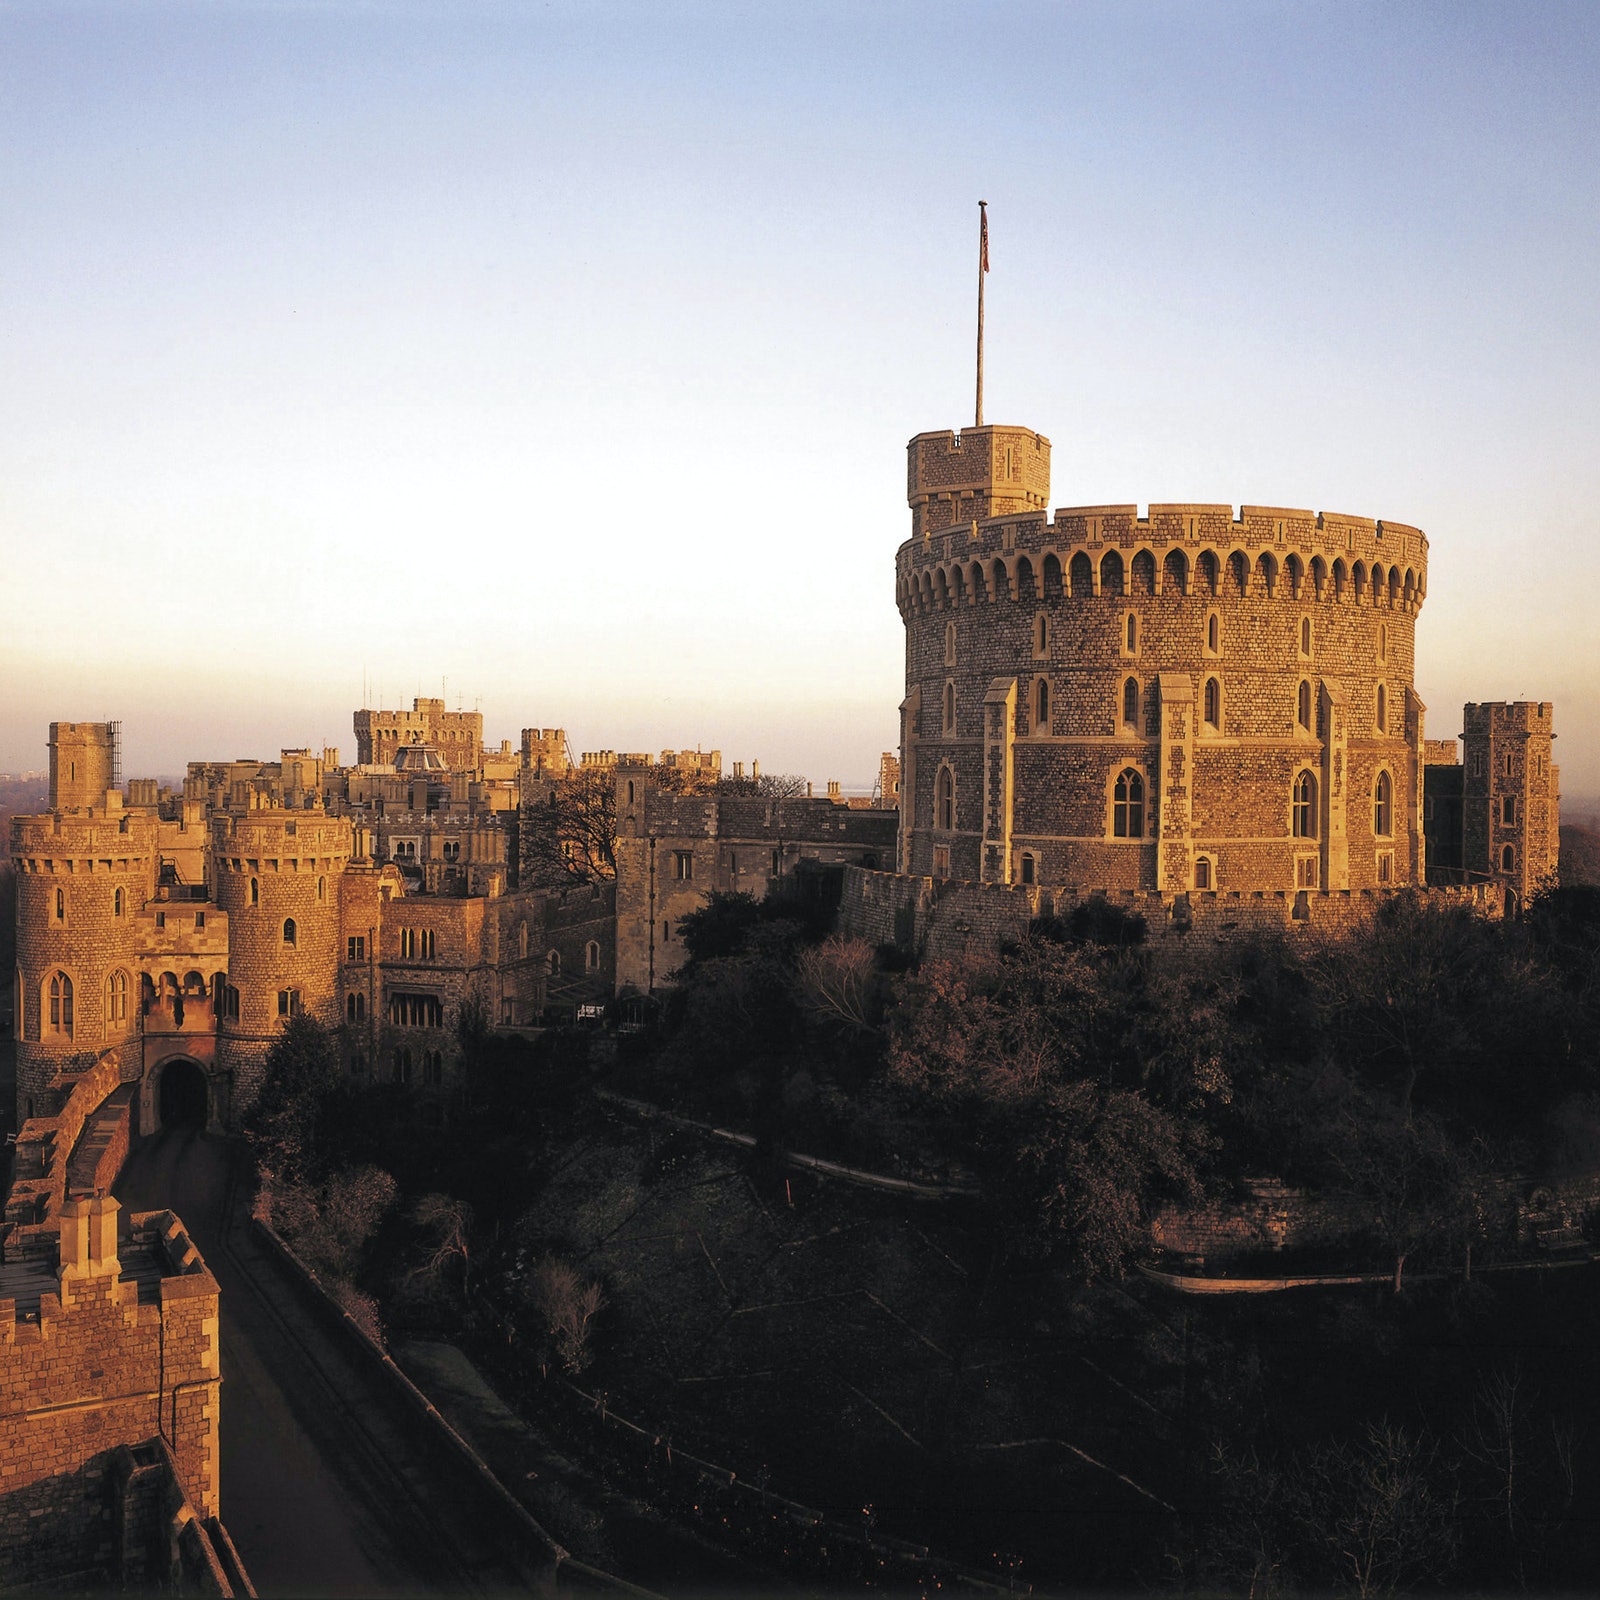 Windsor Castle in United Kingdom